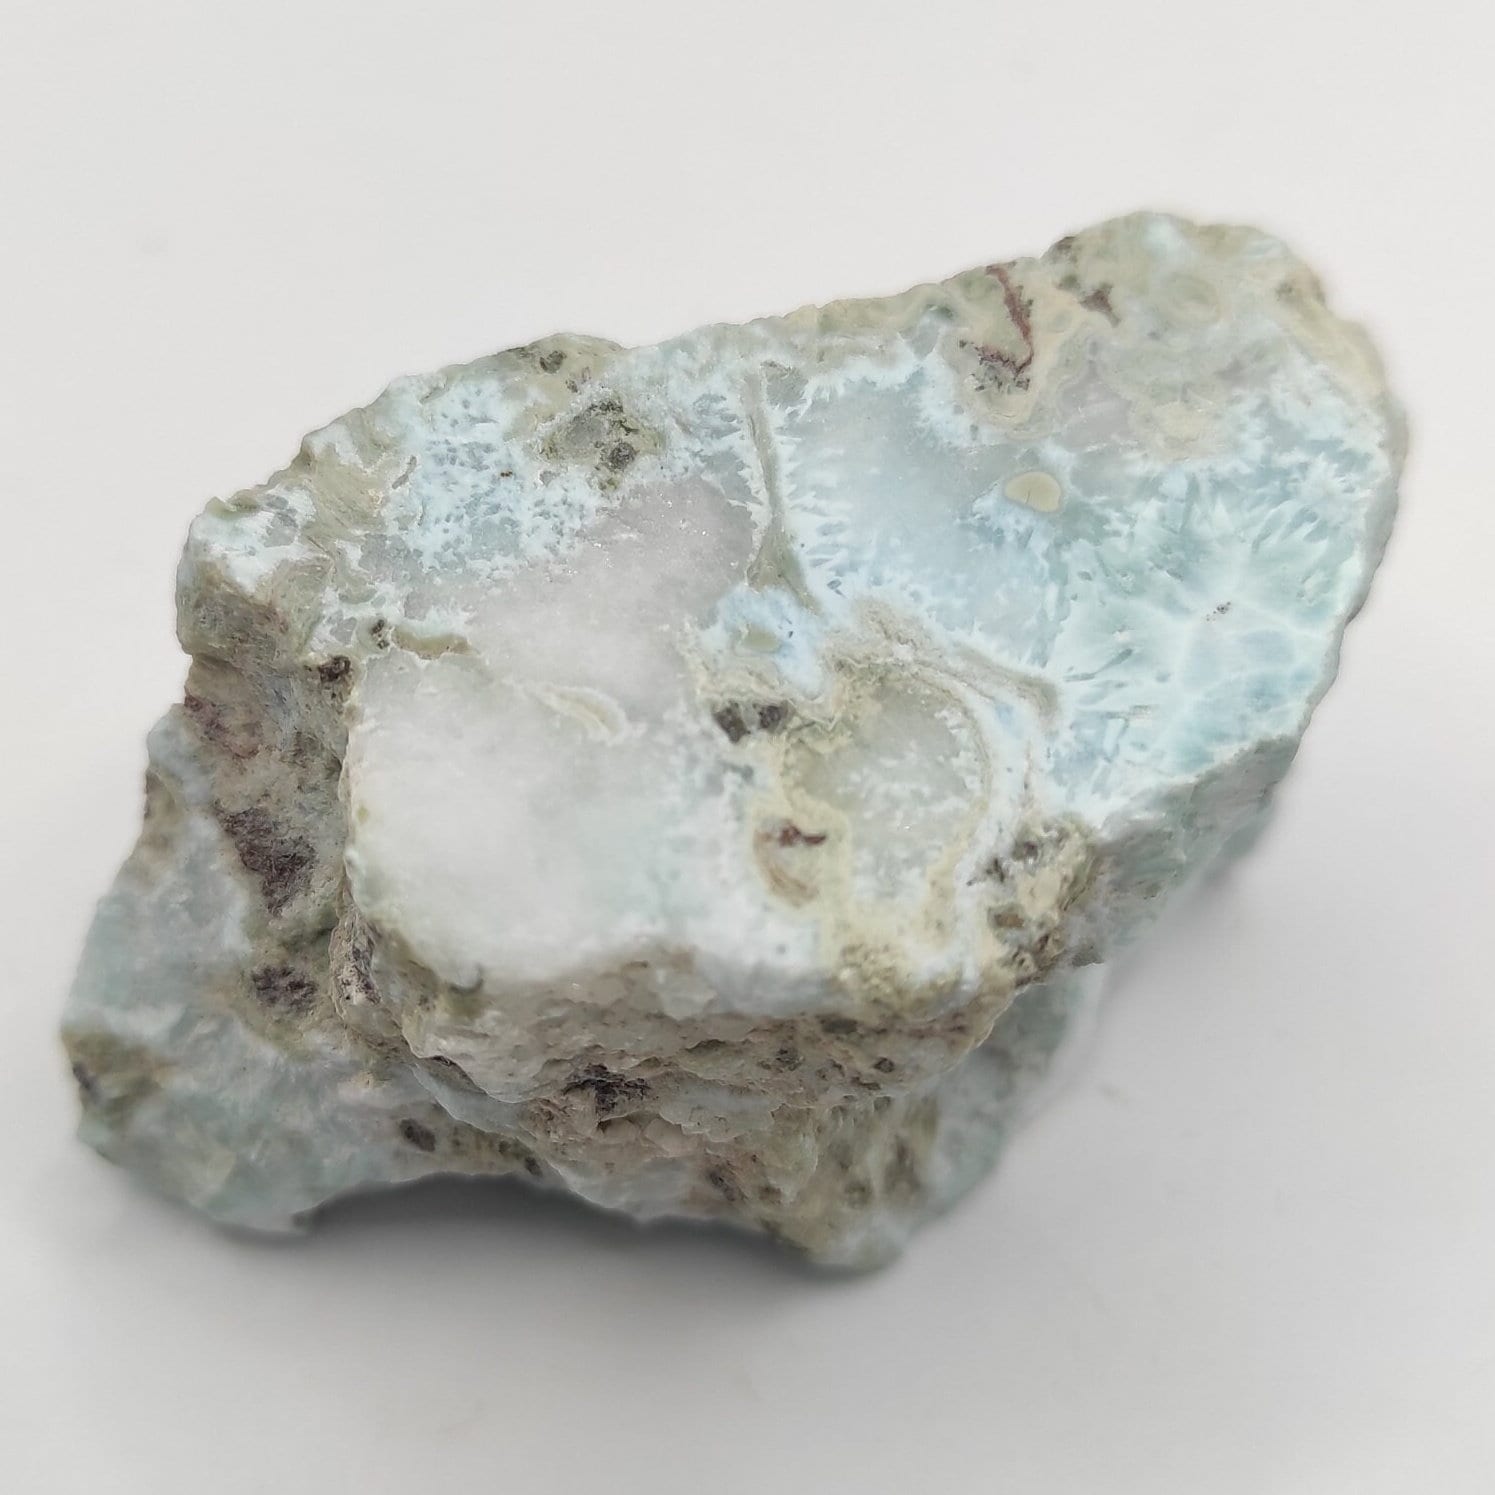 74g Larimar Freeform - Polished and Raw - Sky Blue Larimar - Barahona, Dominican Republic - Rare Larimar Crystal - Hand Polished Larimar